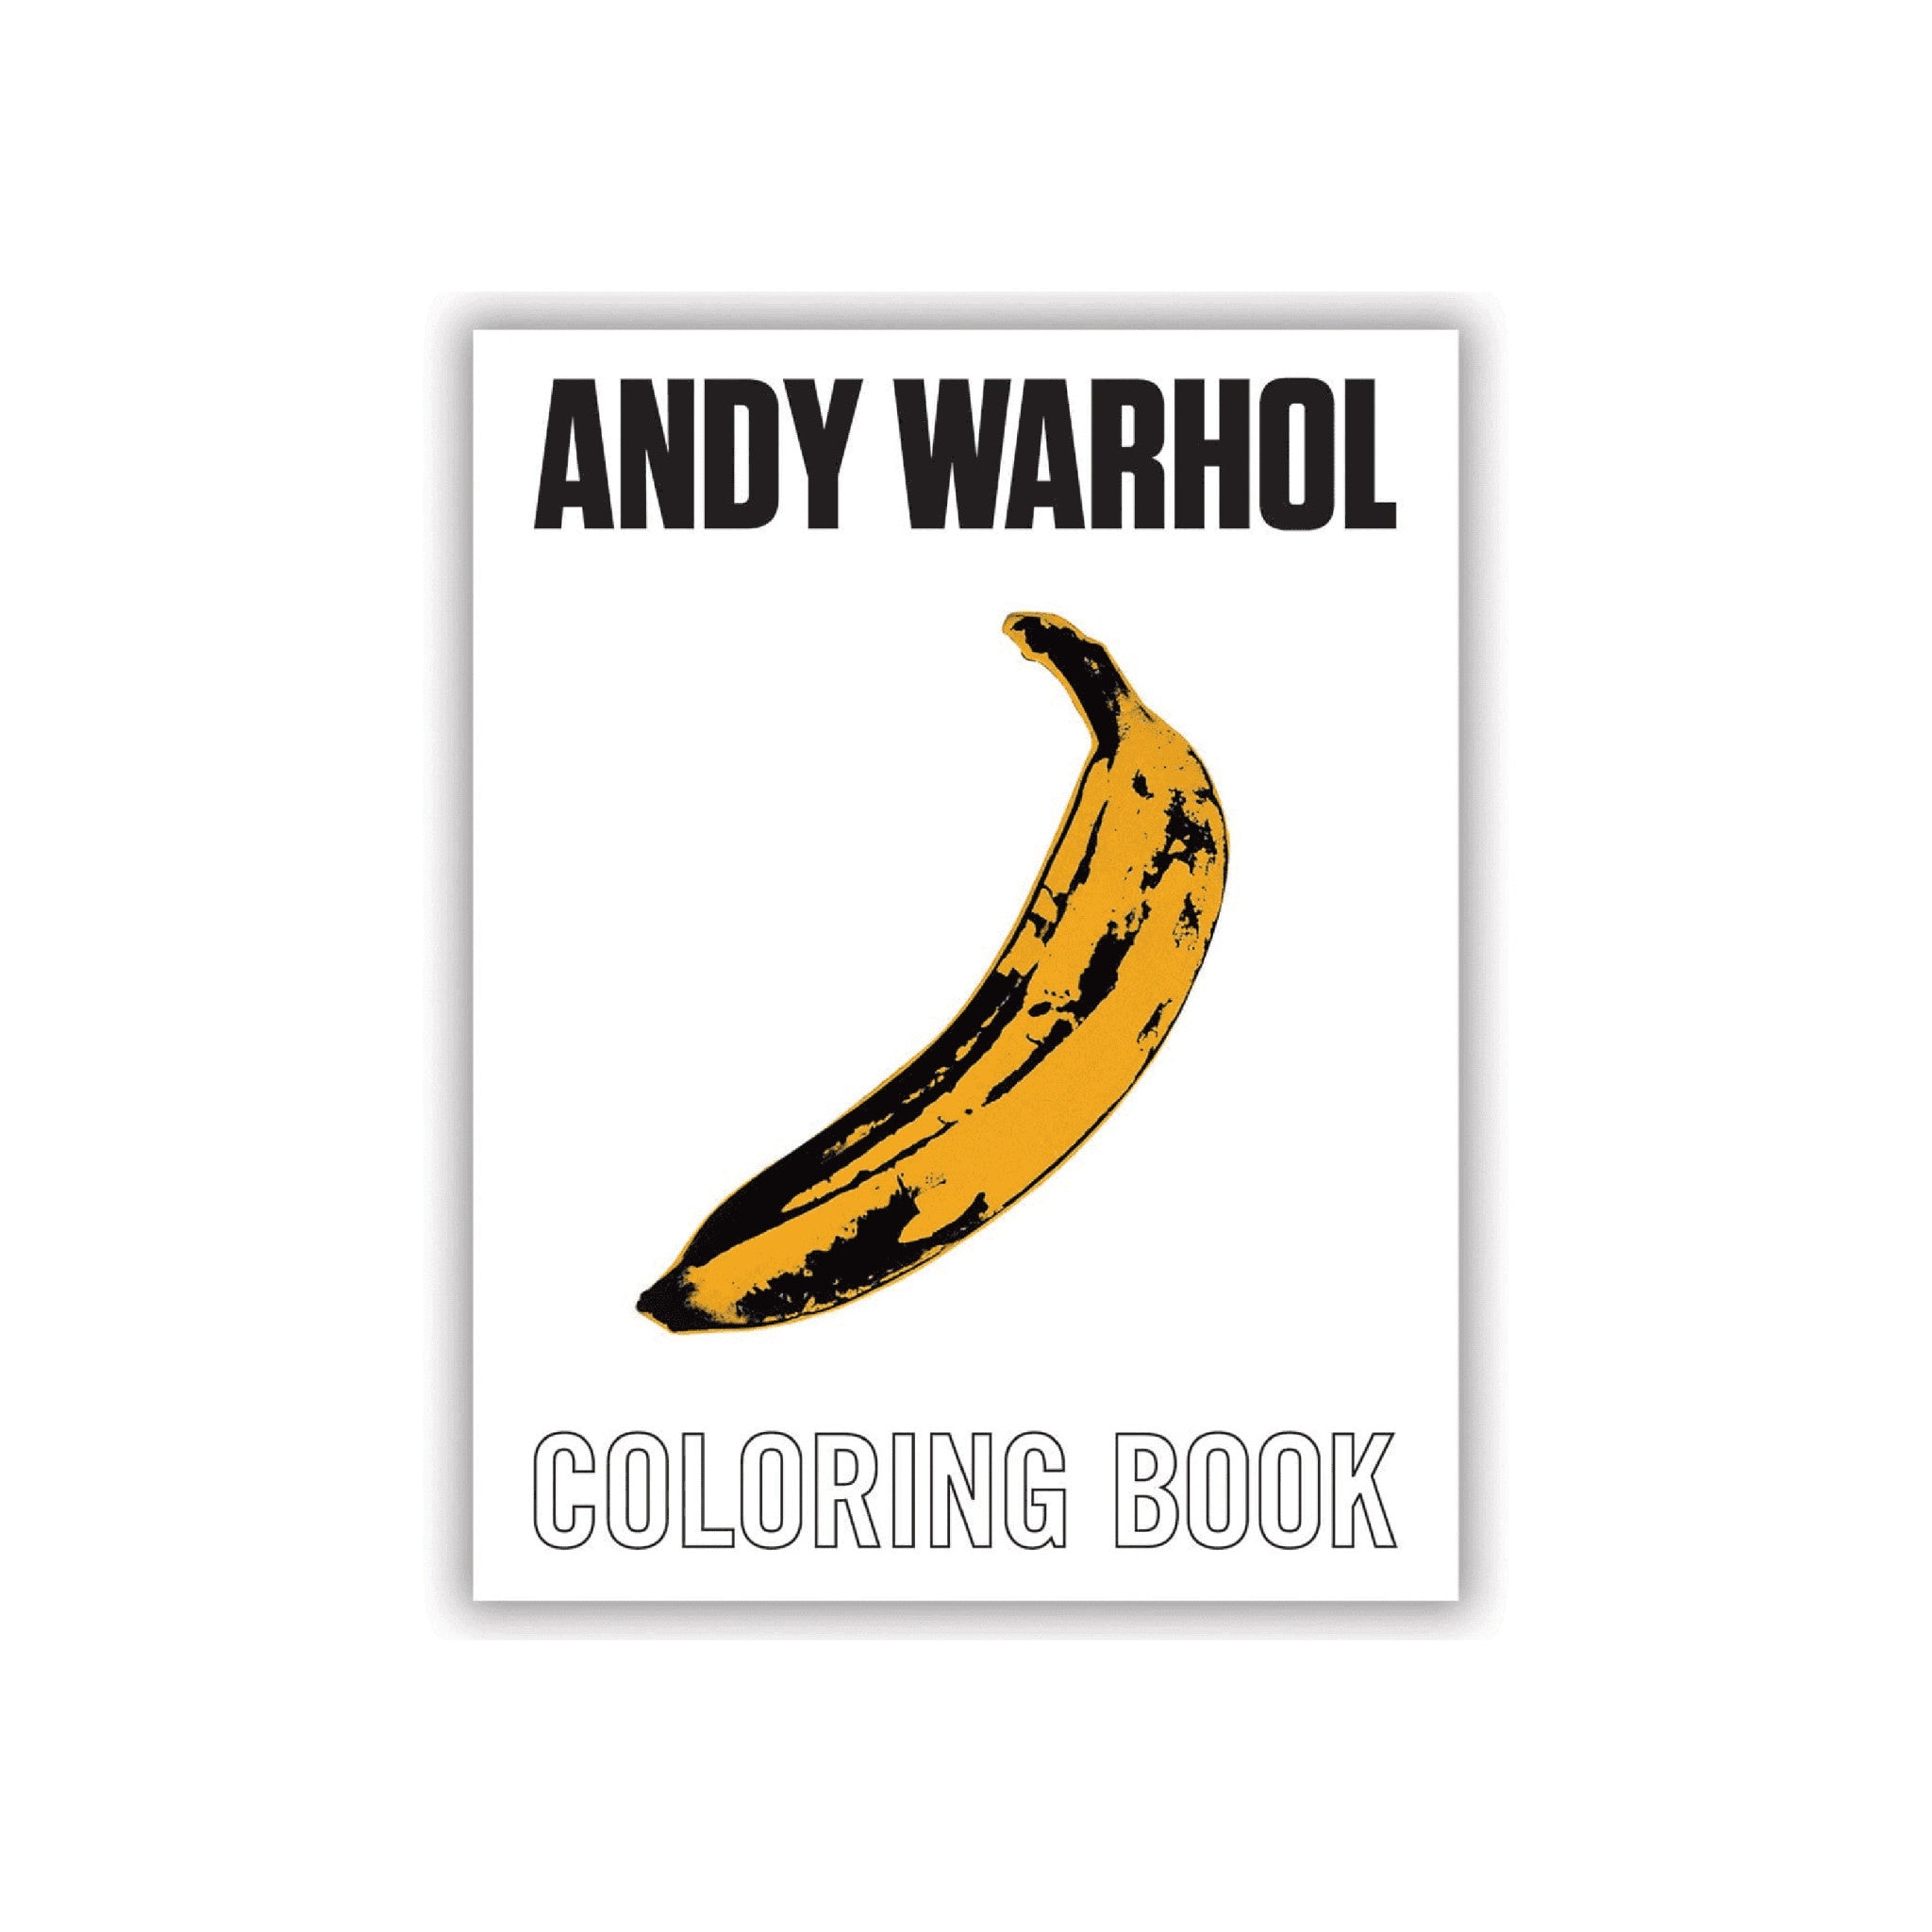 Andy Warhol Coloring Book - Wynwood Walls Shop